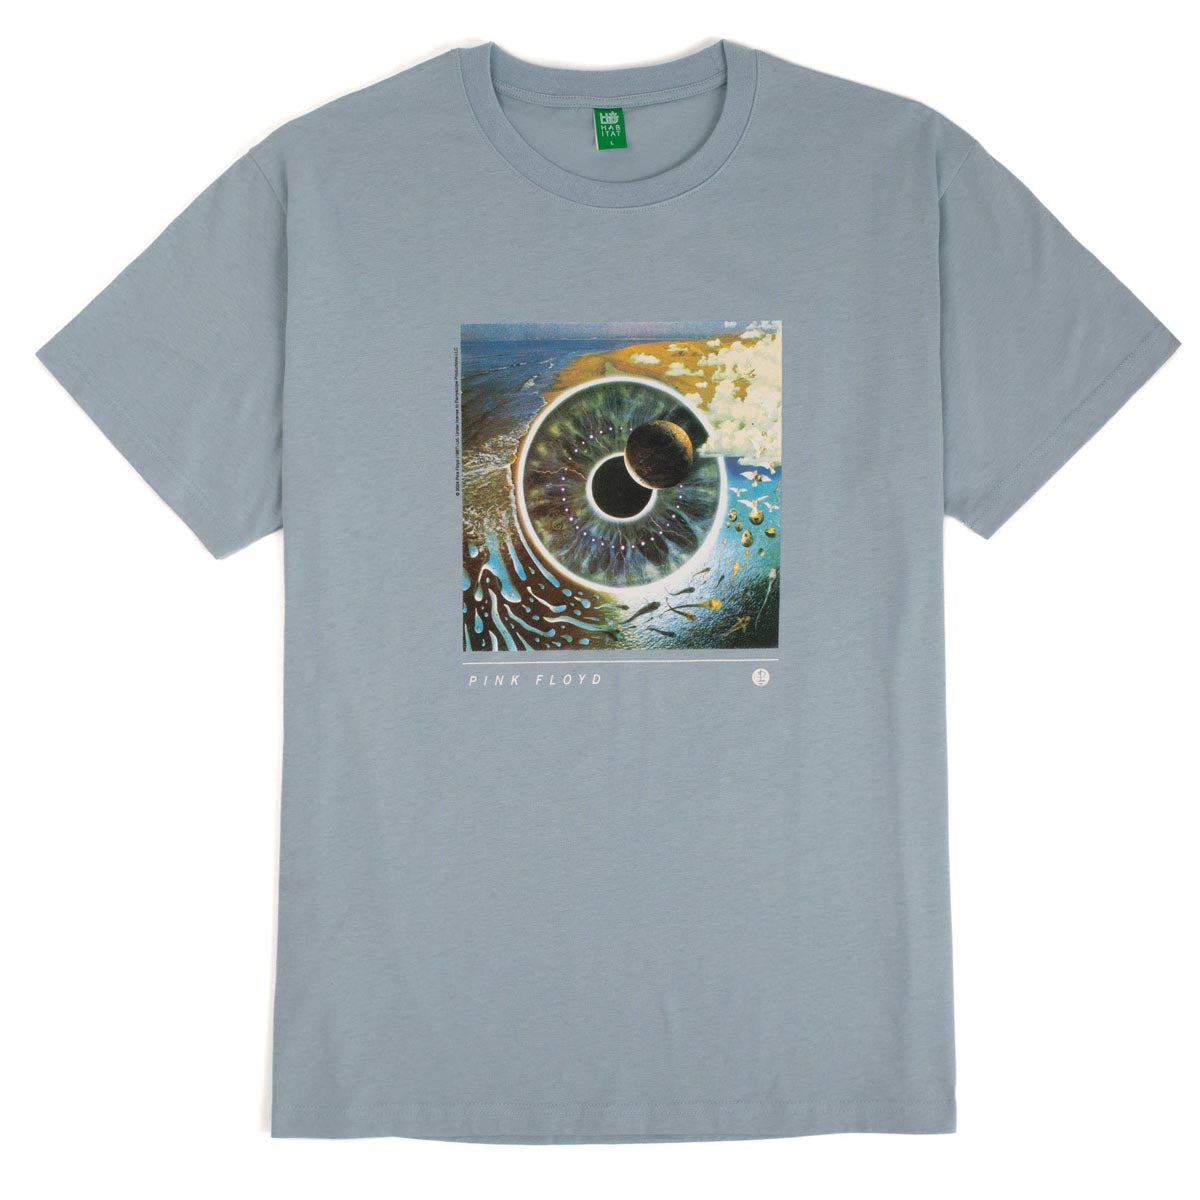 Habitat x Pink Floyd Pulse T-Shirt - Indigo image 1